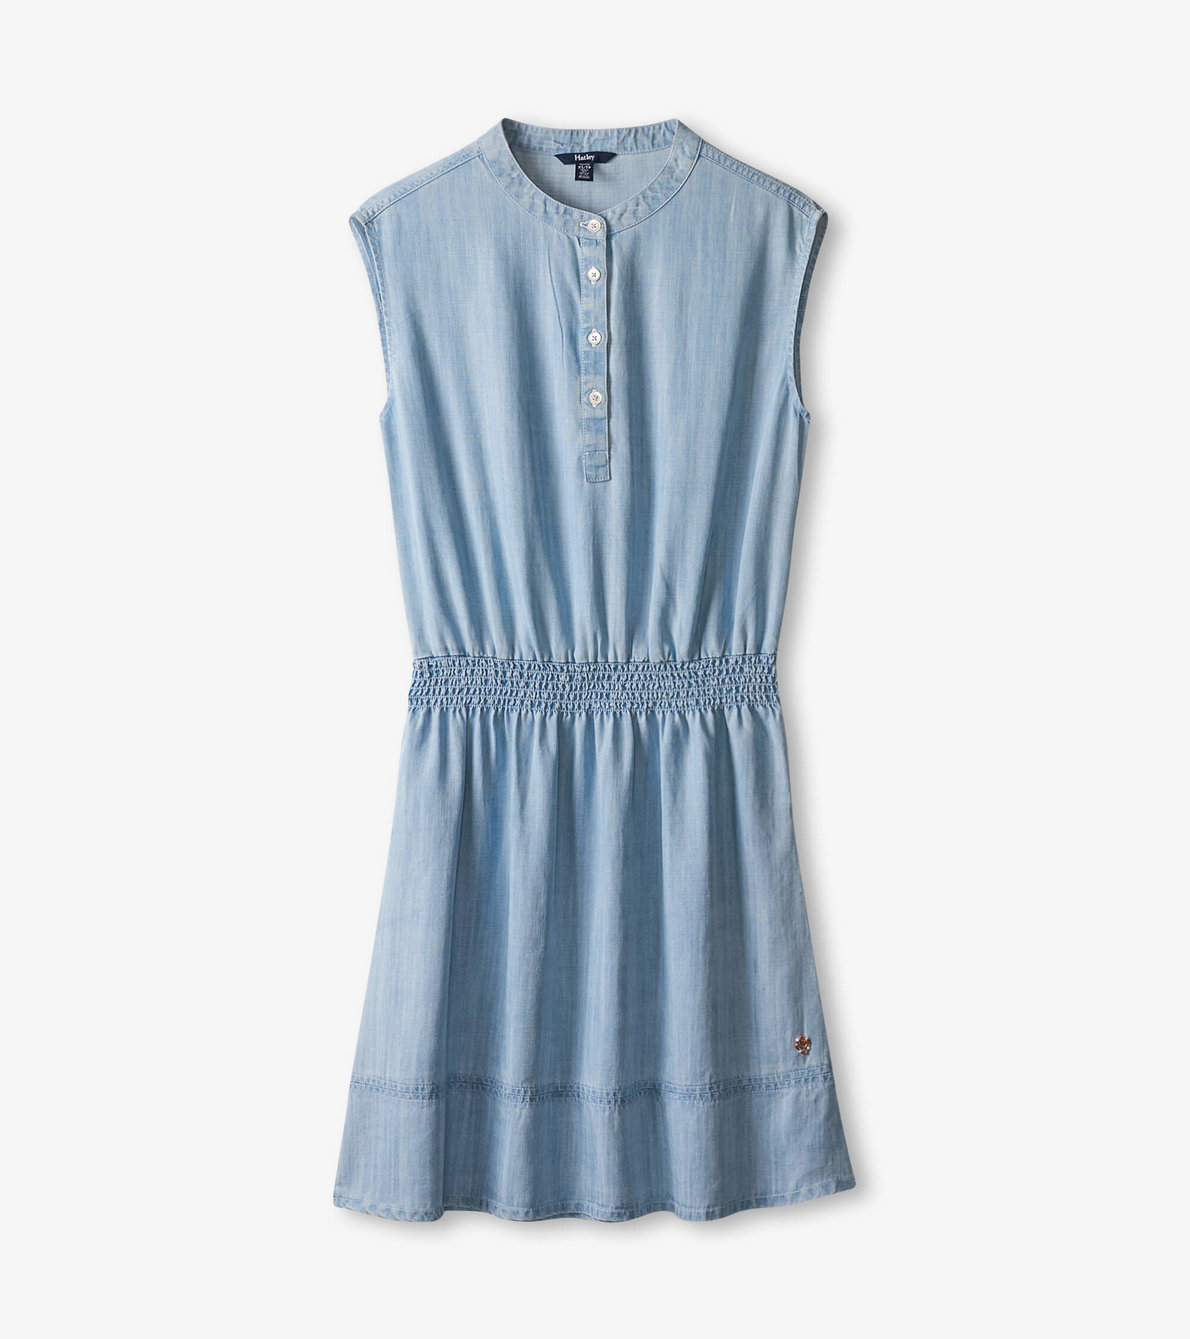 View larger image of Abbey Shirt Dress - Denim